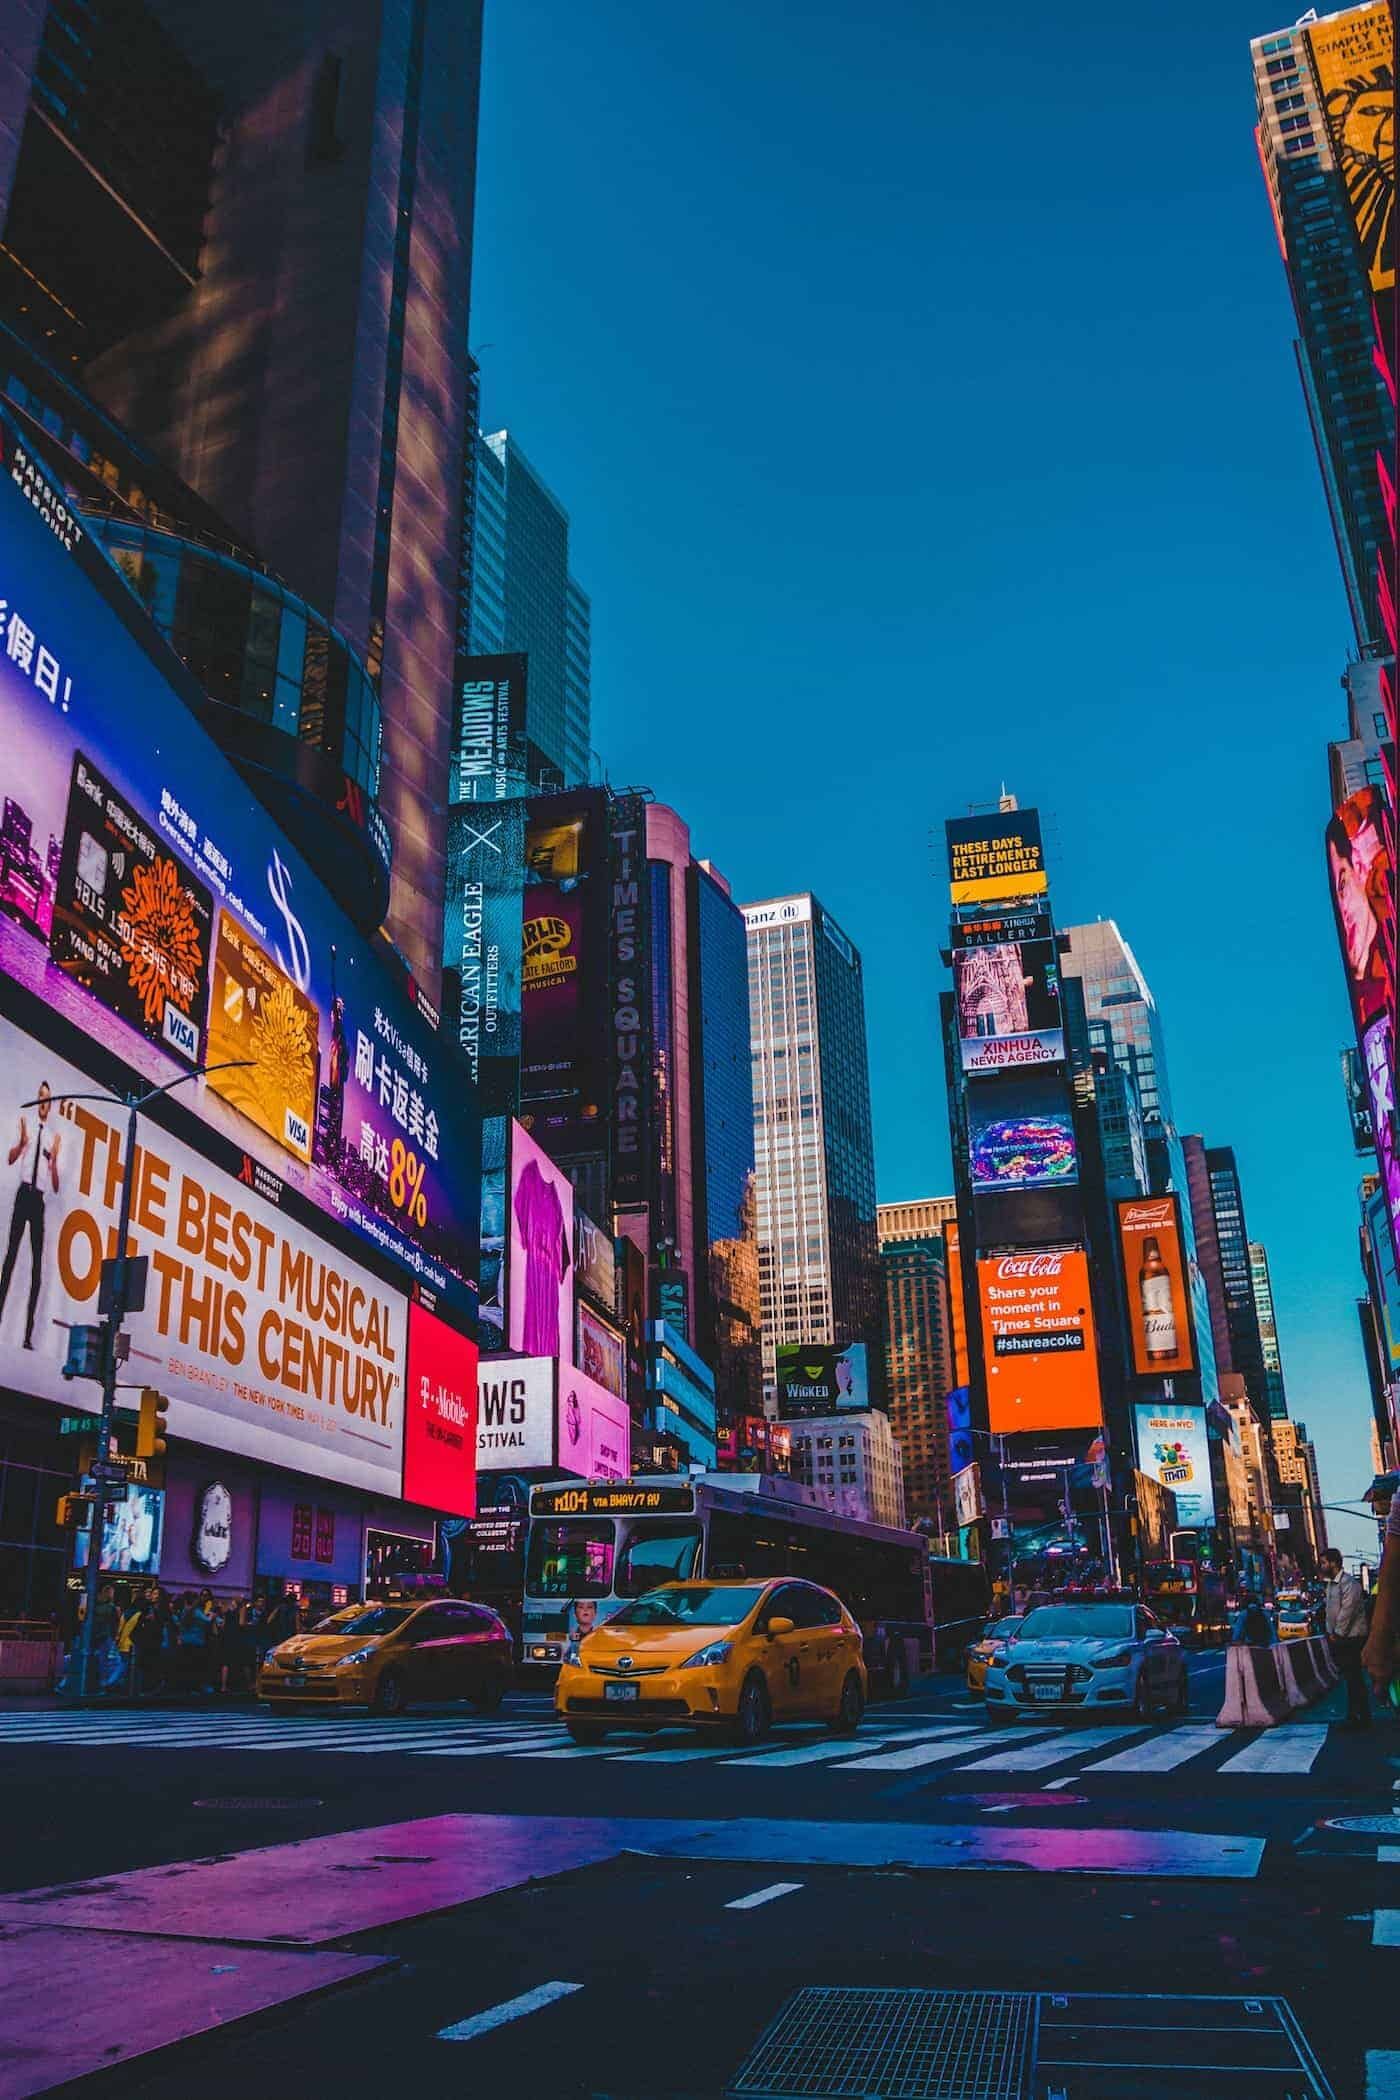 Photo Spots in New York City. New york wallpaper, City aesthetic, City landscape